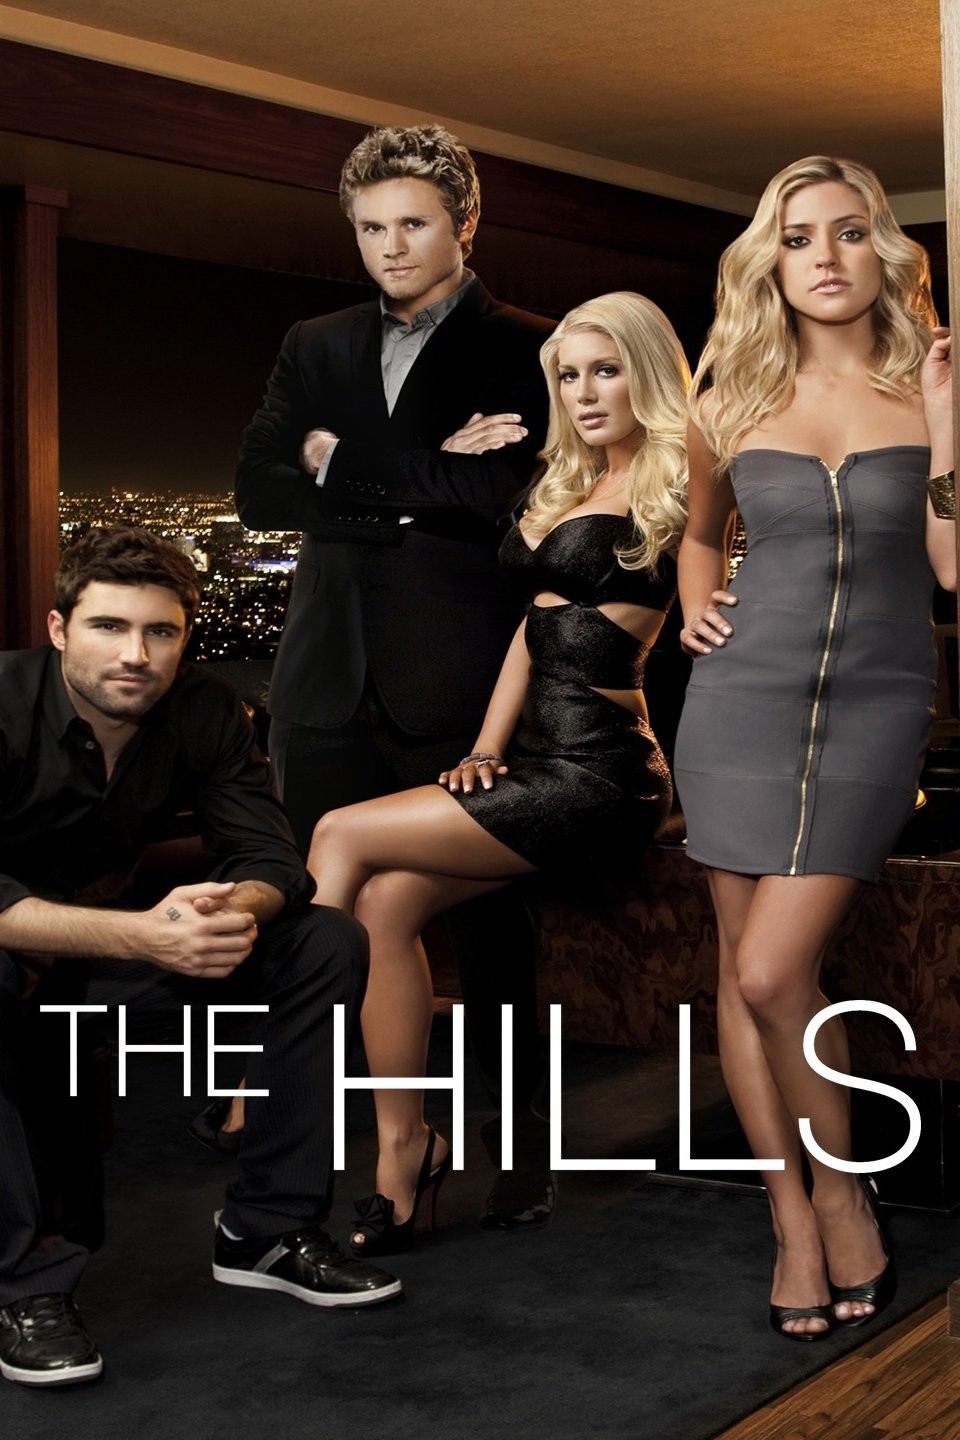 The Hills: Season 1